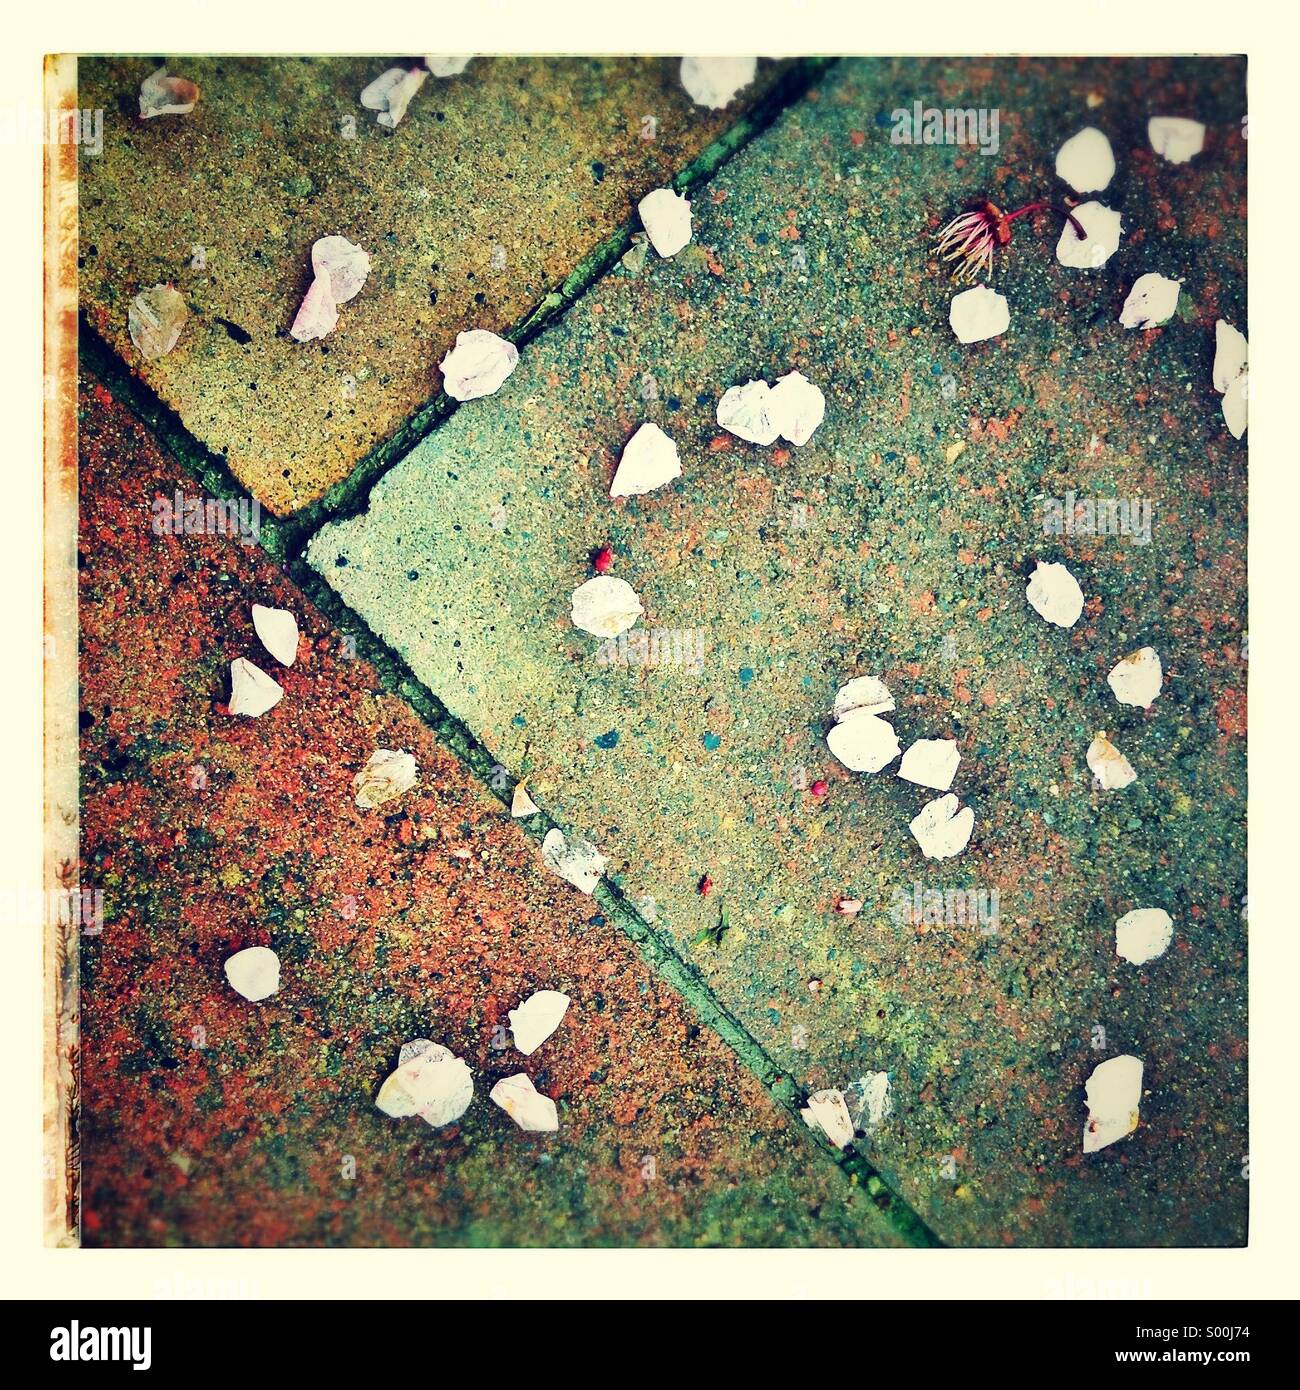 Confetti on a wet sidewalk Stock Photo